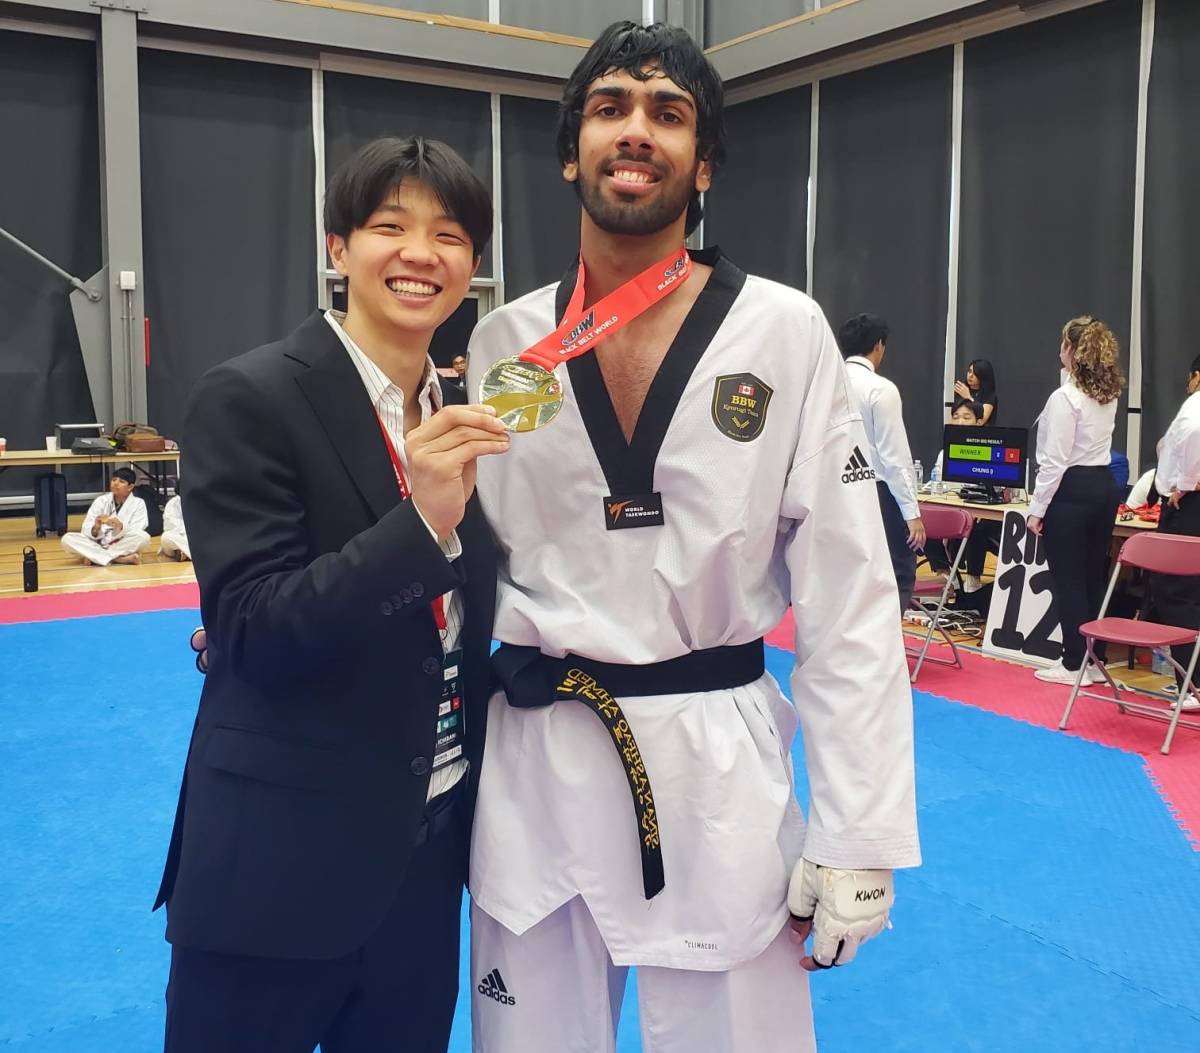 Pakistan's Sinan Ashfaq bags gold medal at Canadian Taekwondo Championship